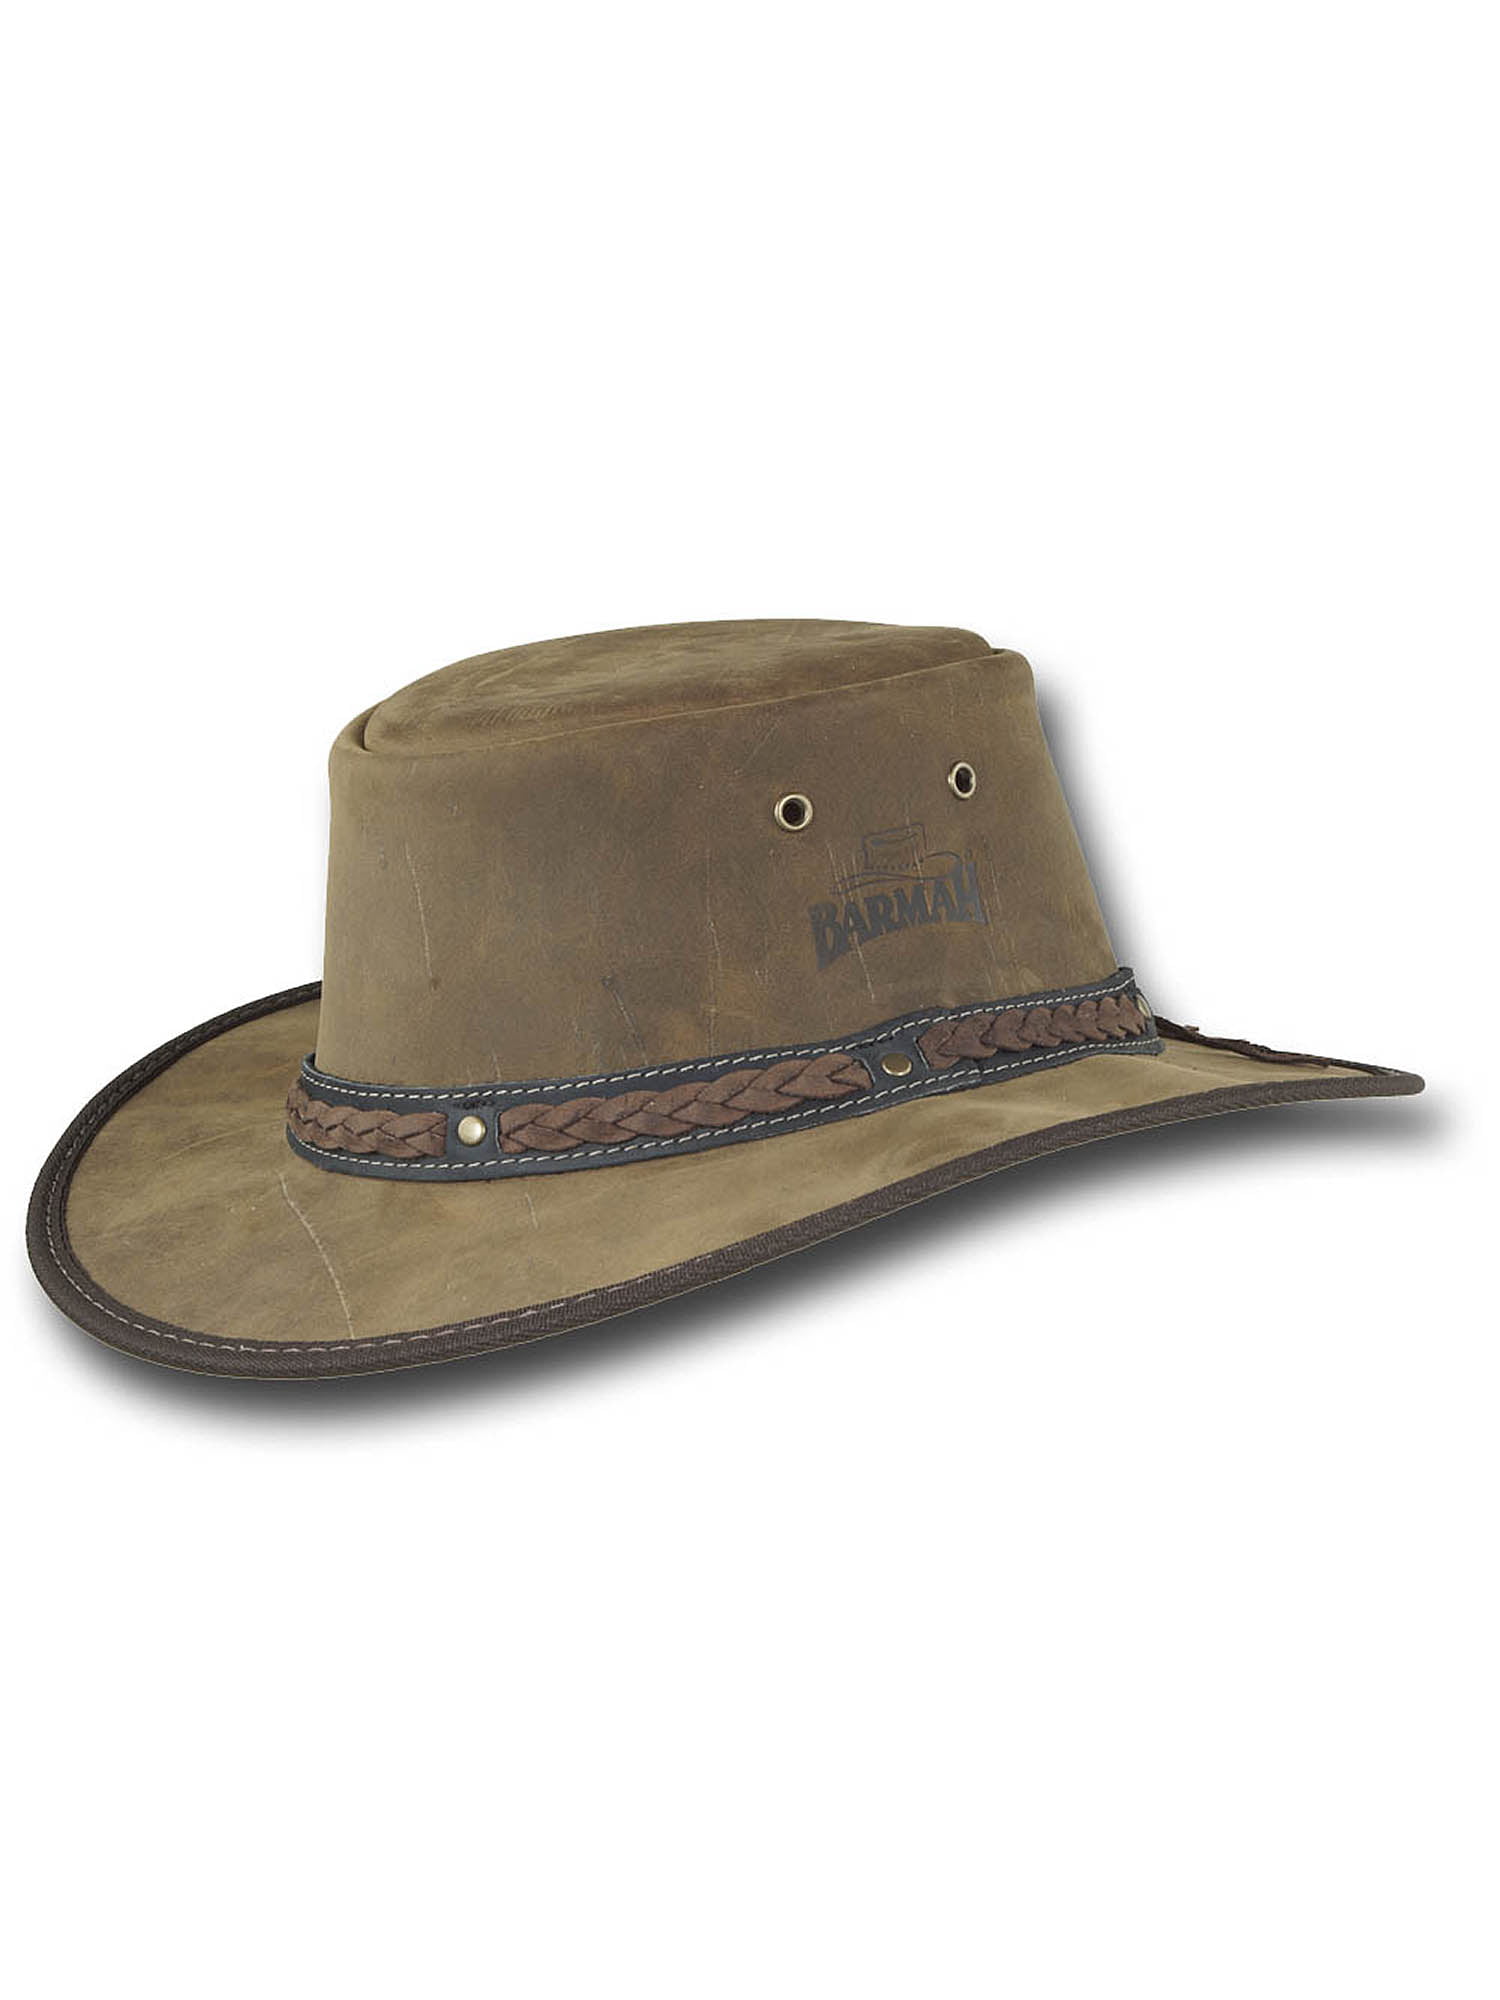 Barmah Hats Foldaway Bronco Leather Hat - Item 1060 - Walmart.com ...